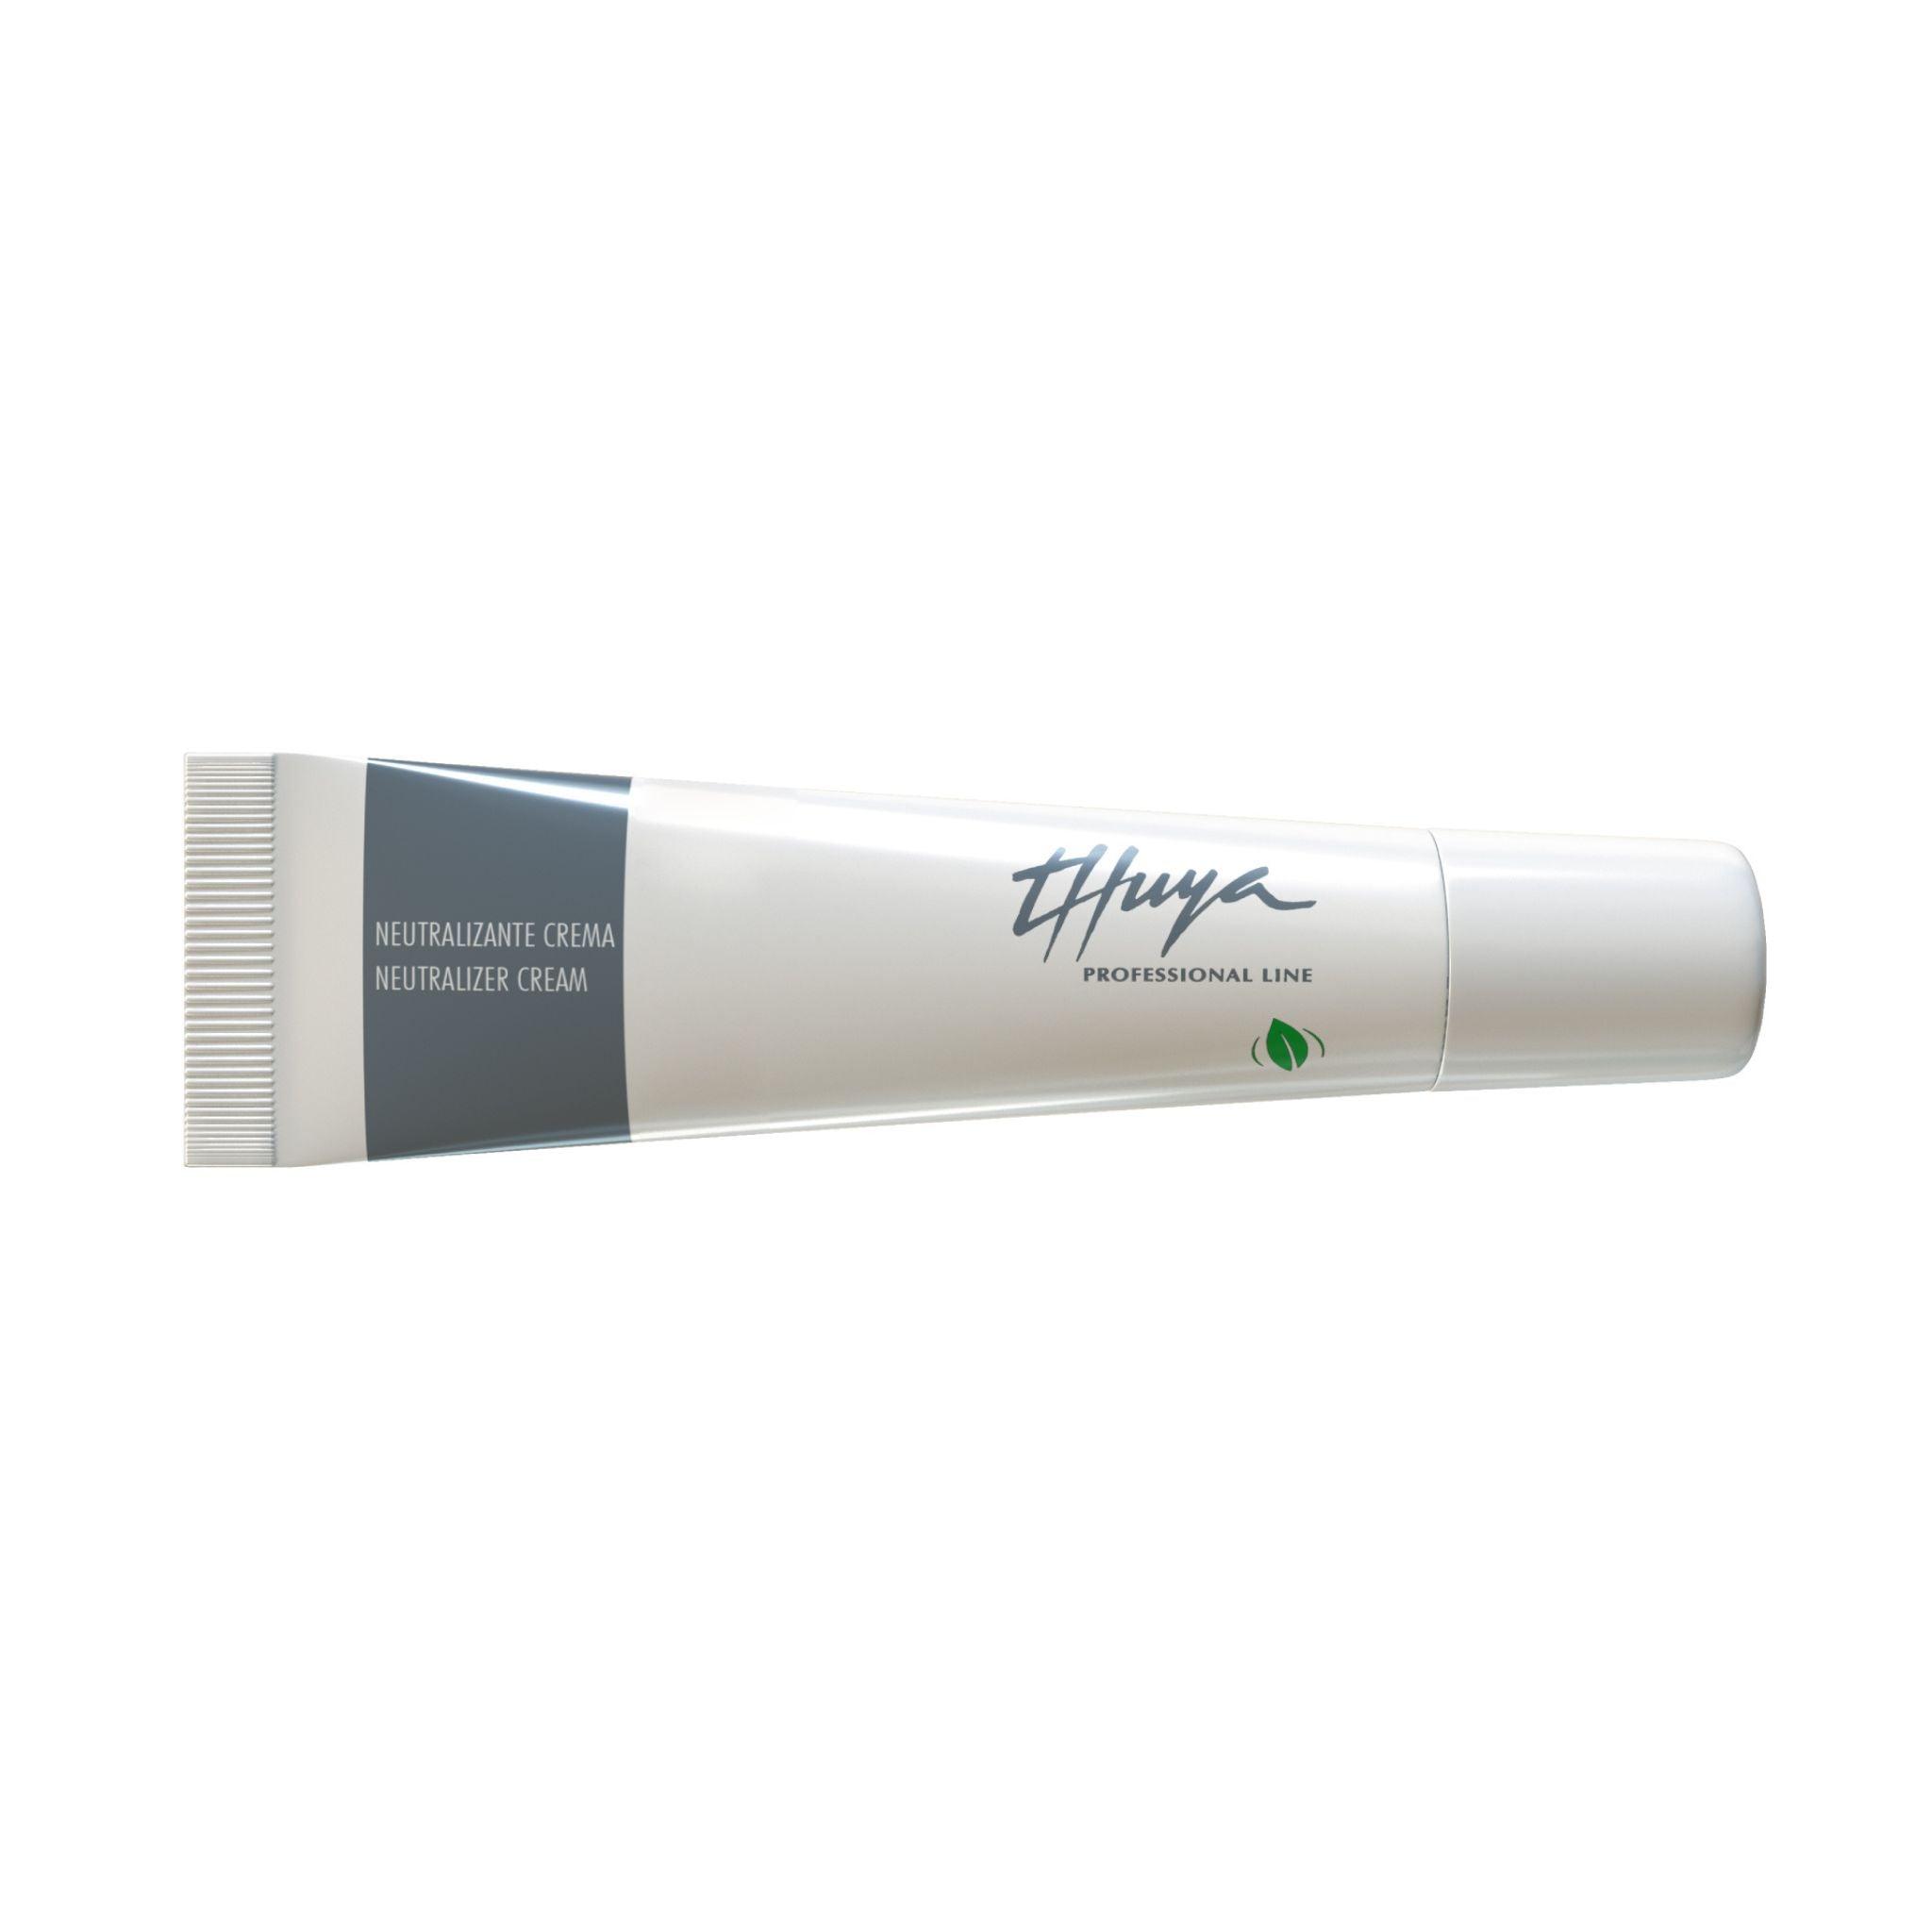 Thuya Neutralizer Cream - Step 2